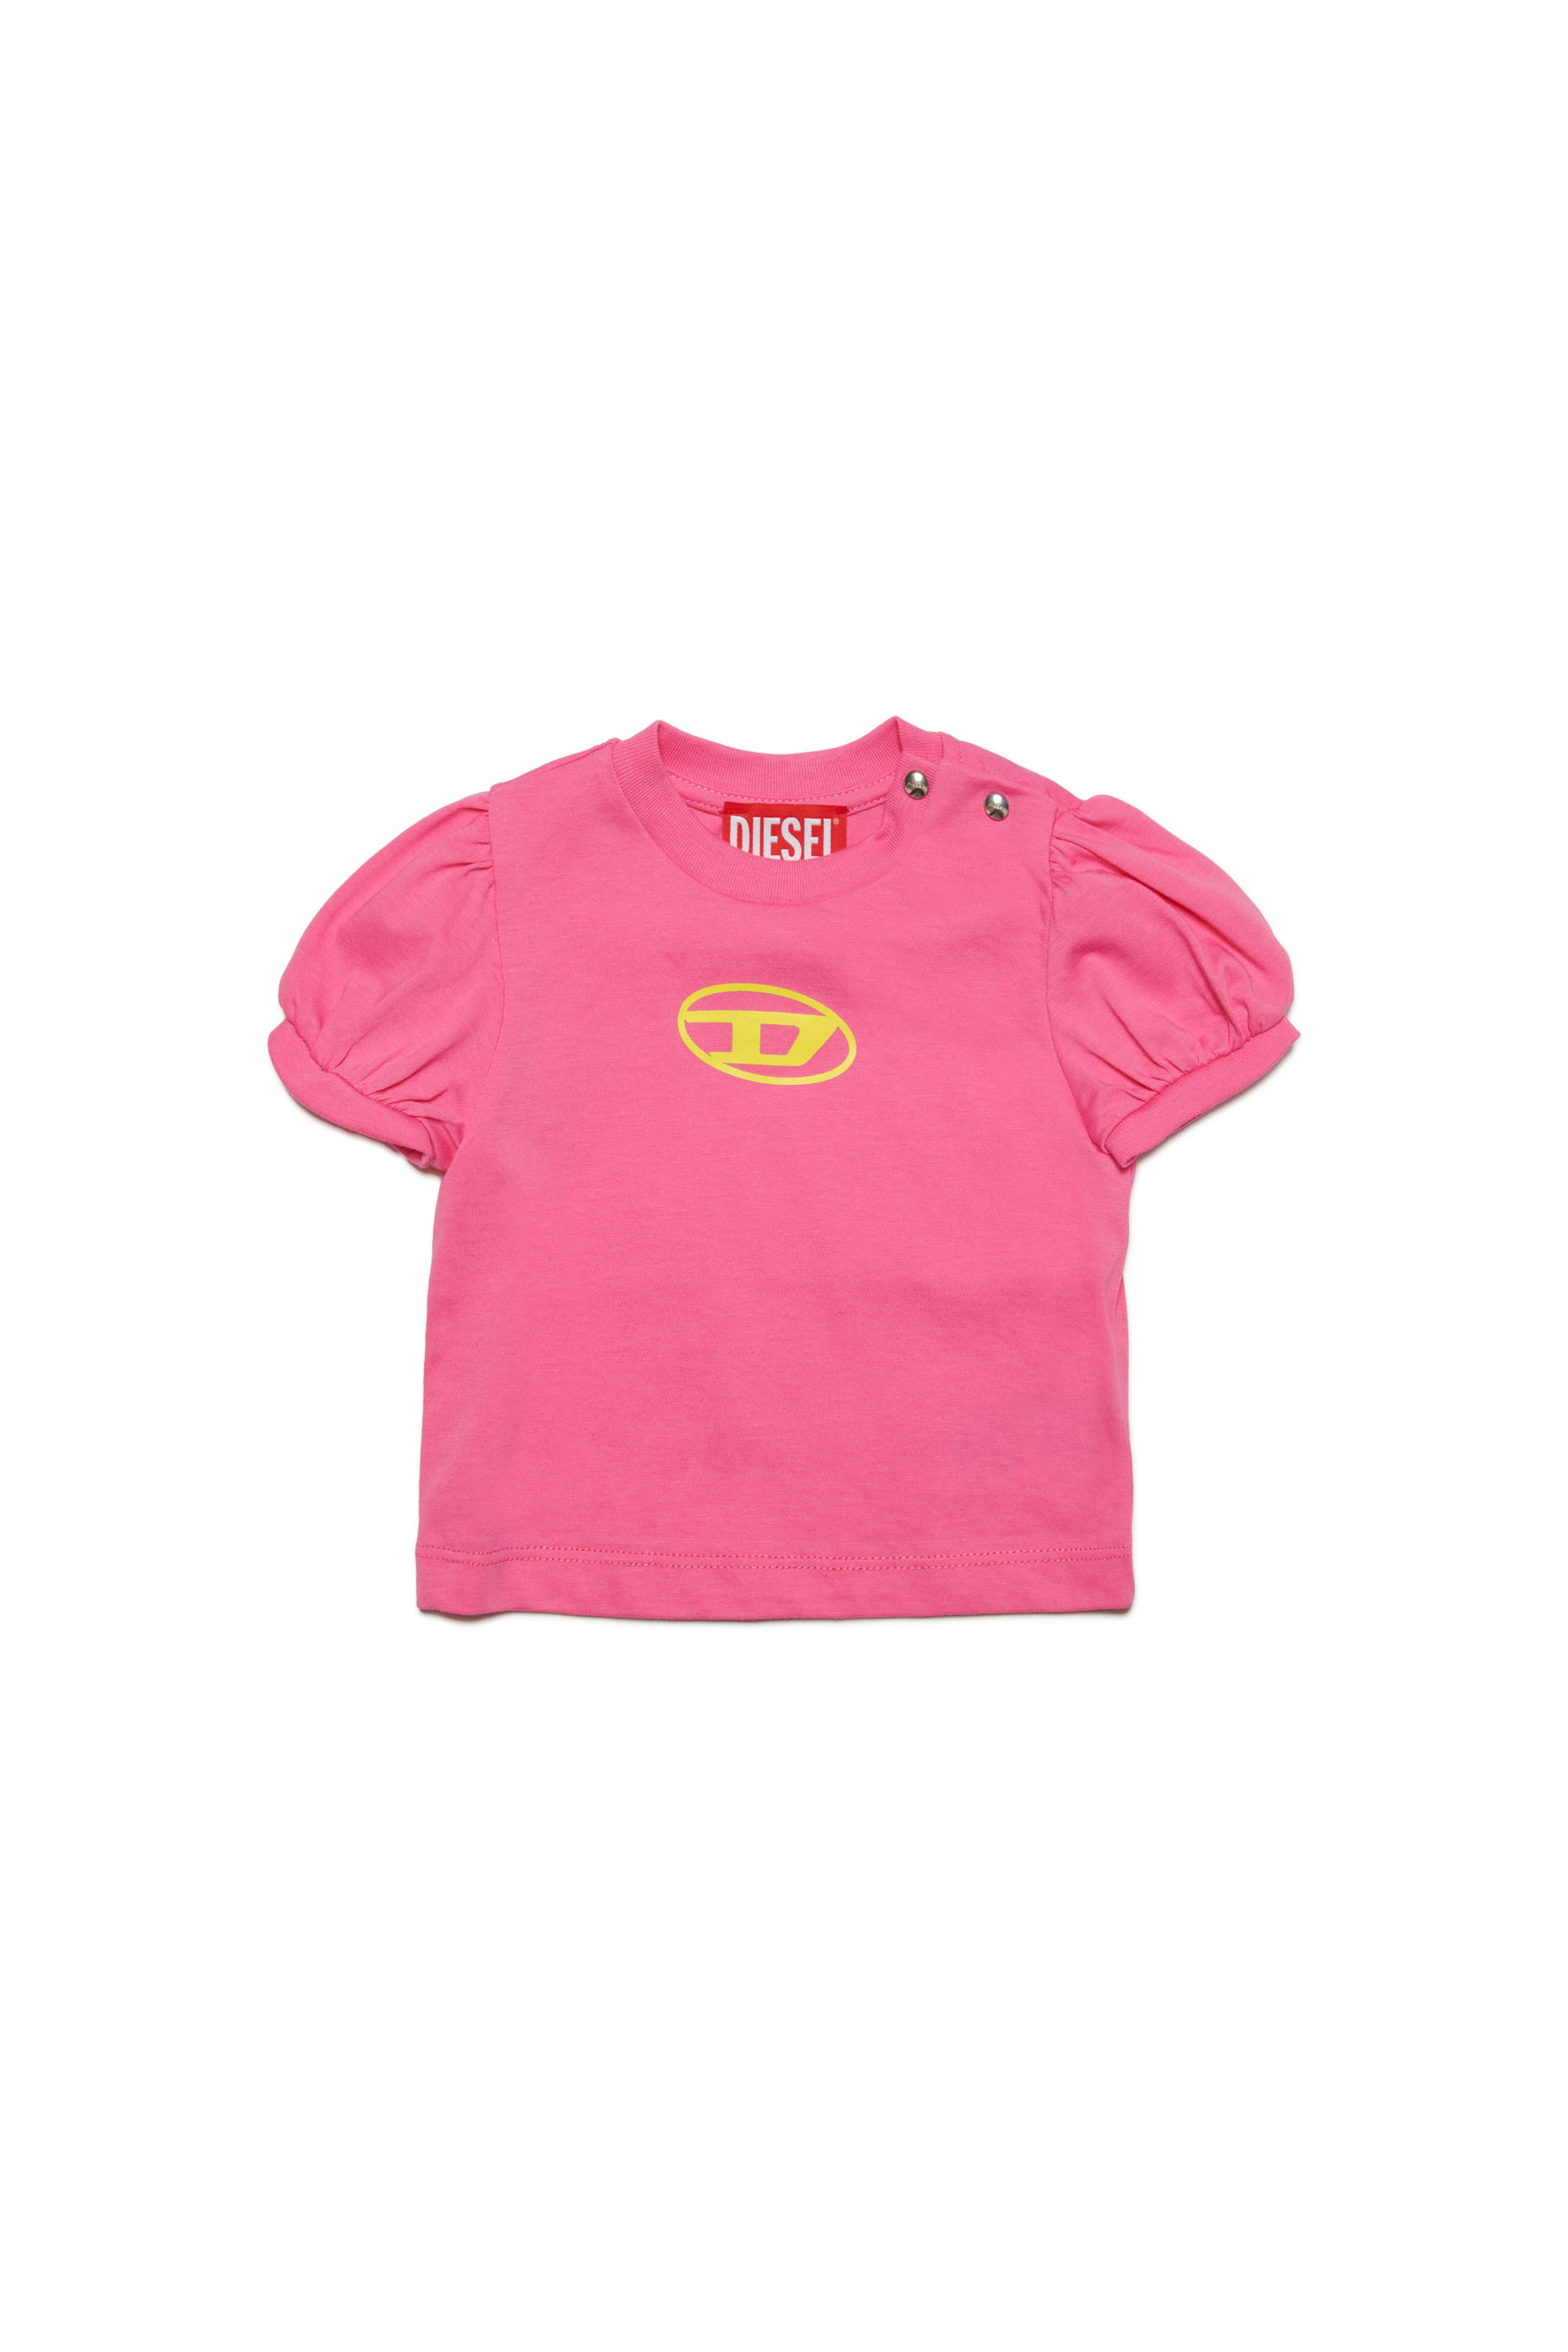 Diesel - T-shirt con maniche a sbuffo e logo Oval D - T-shirts e Tops - Donna - Rosa